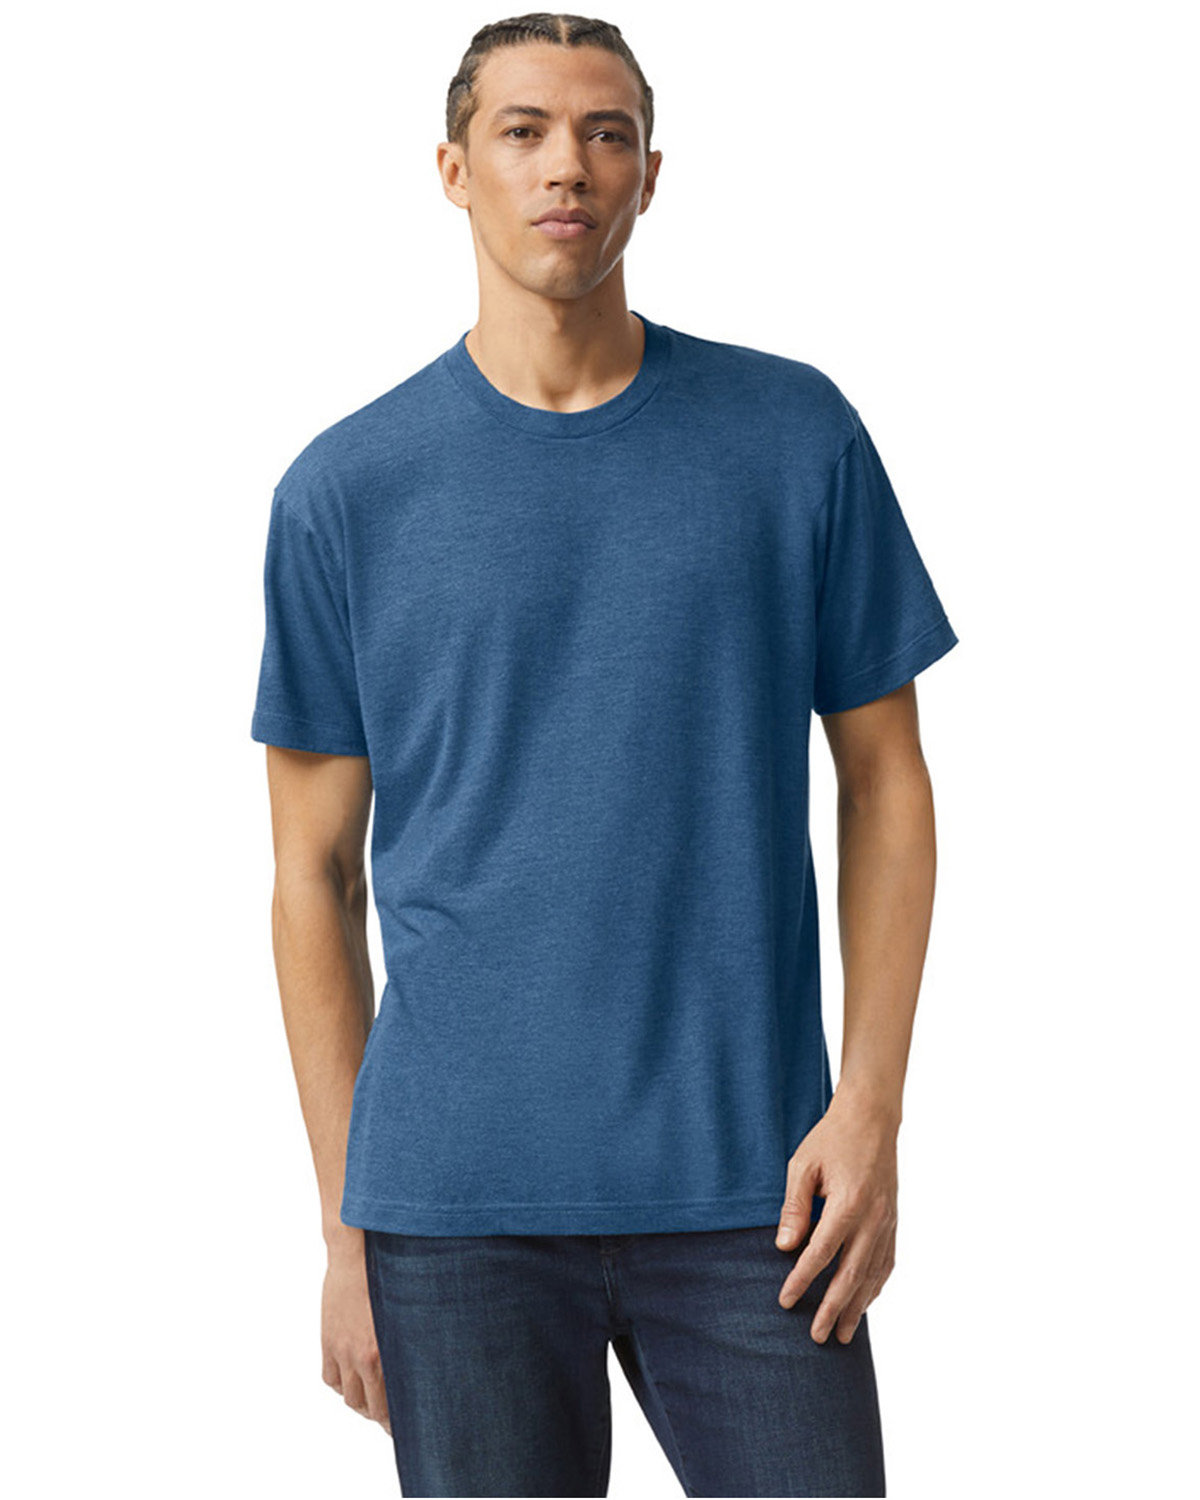 American Apparel Unisex Triblend Short-Sleeve Track T-Shirt tri dusk 